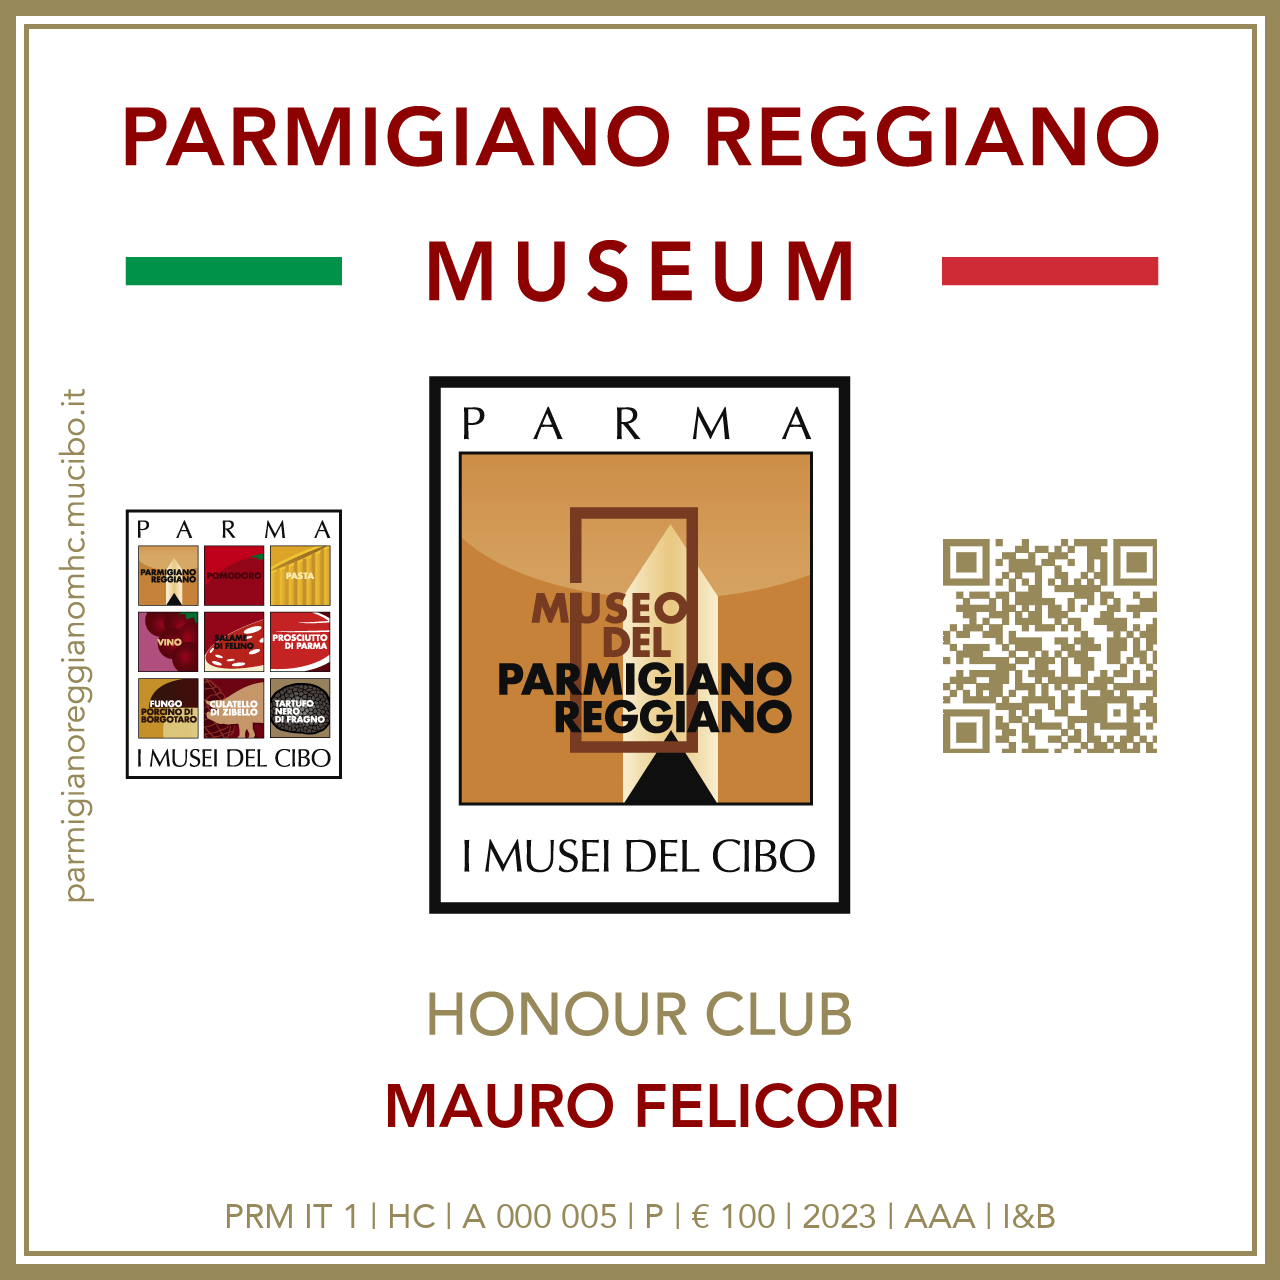 Parmigiano Reggiano Museum Honour Club - Token Id A 000 005 - MAURO FELICORI